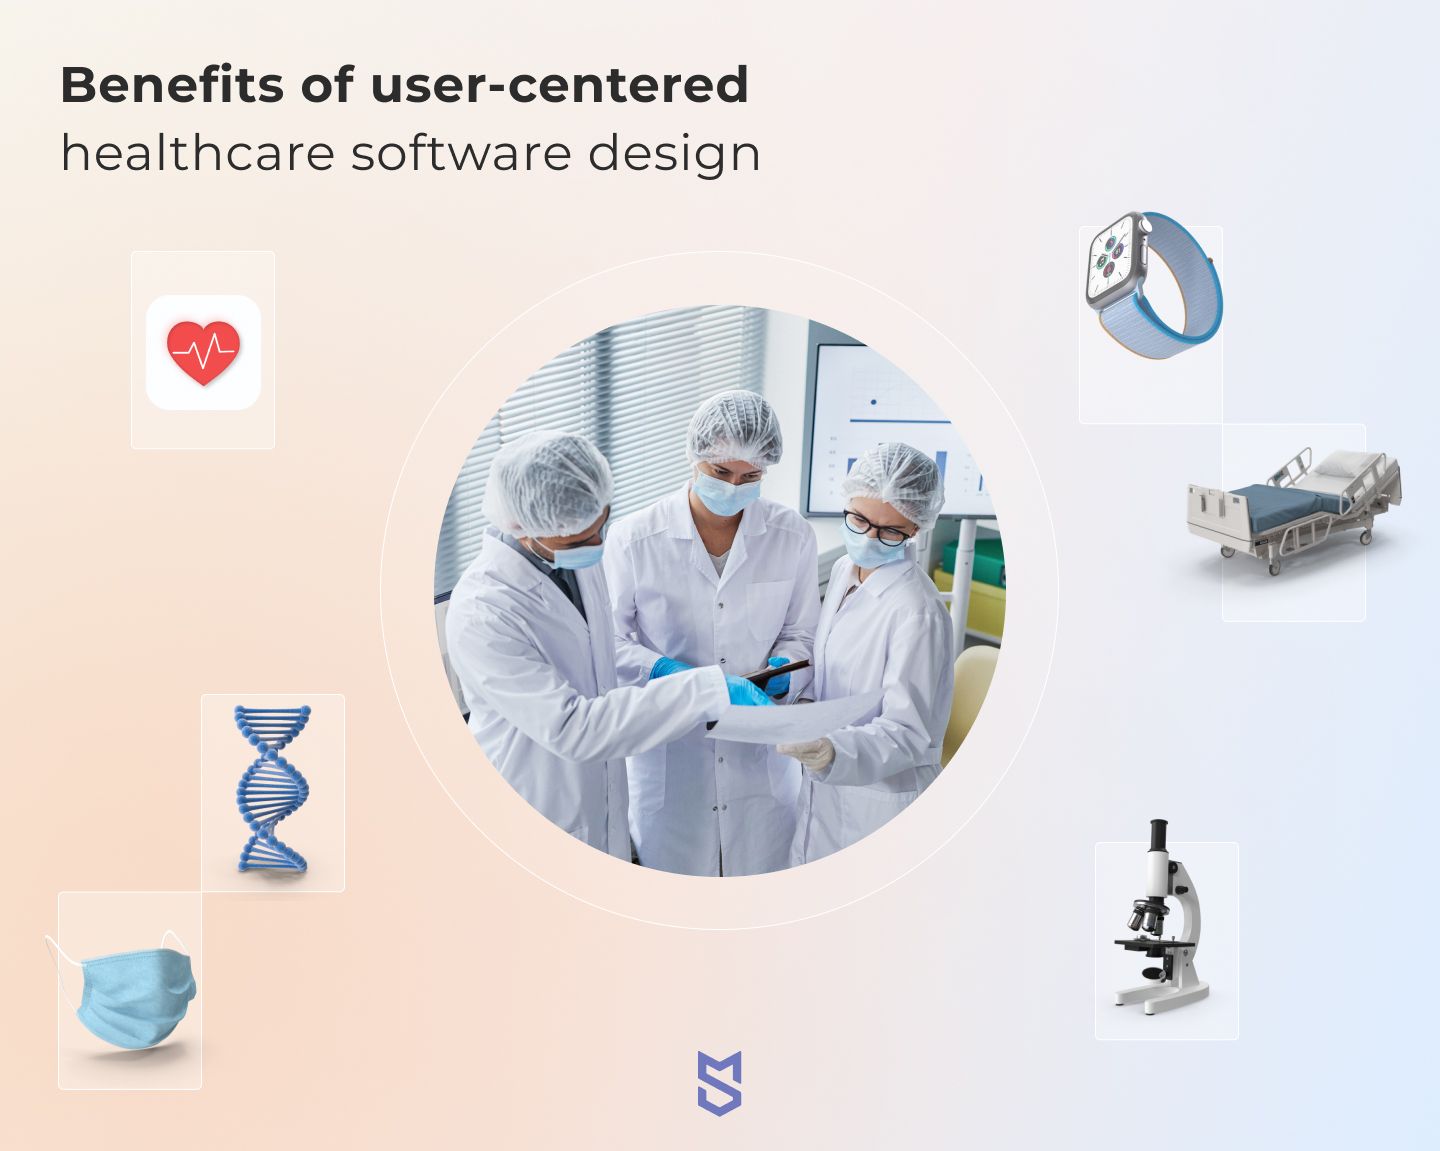 User-centered design in healthcare software